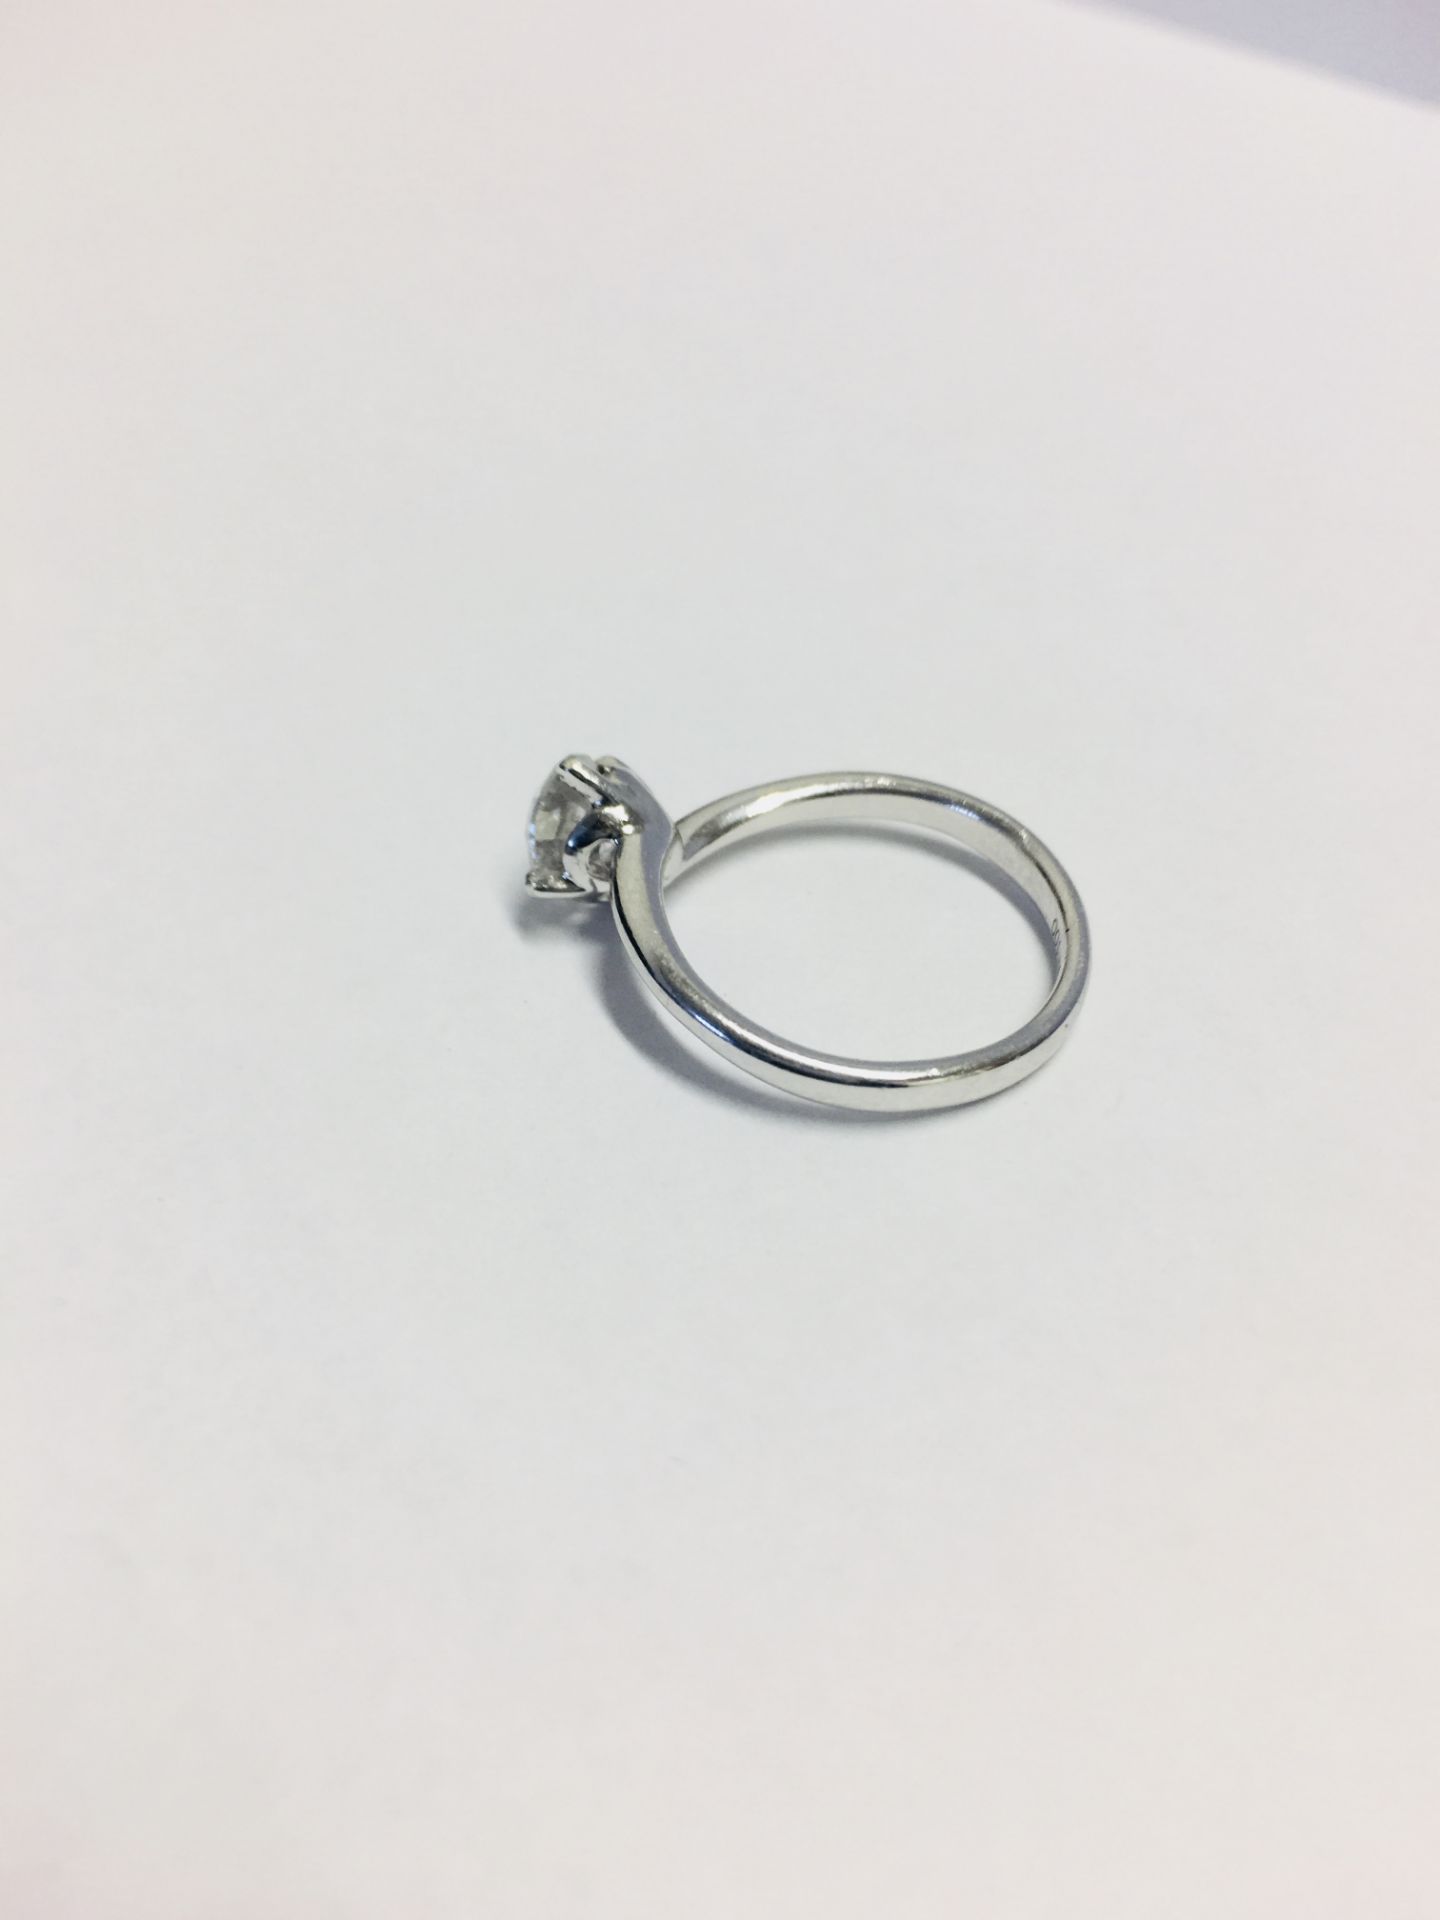 1.01ct brilliant cut diamond solitaire ring - Image 3 of 6